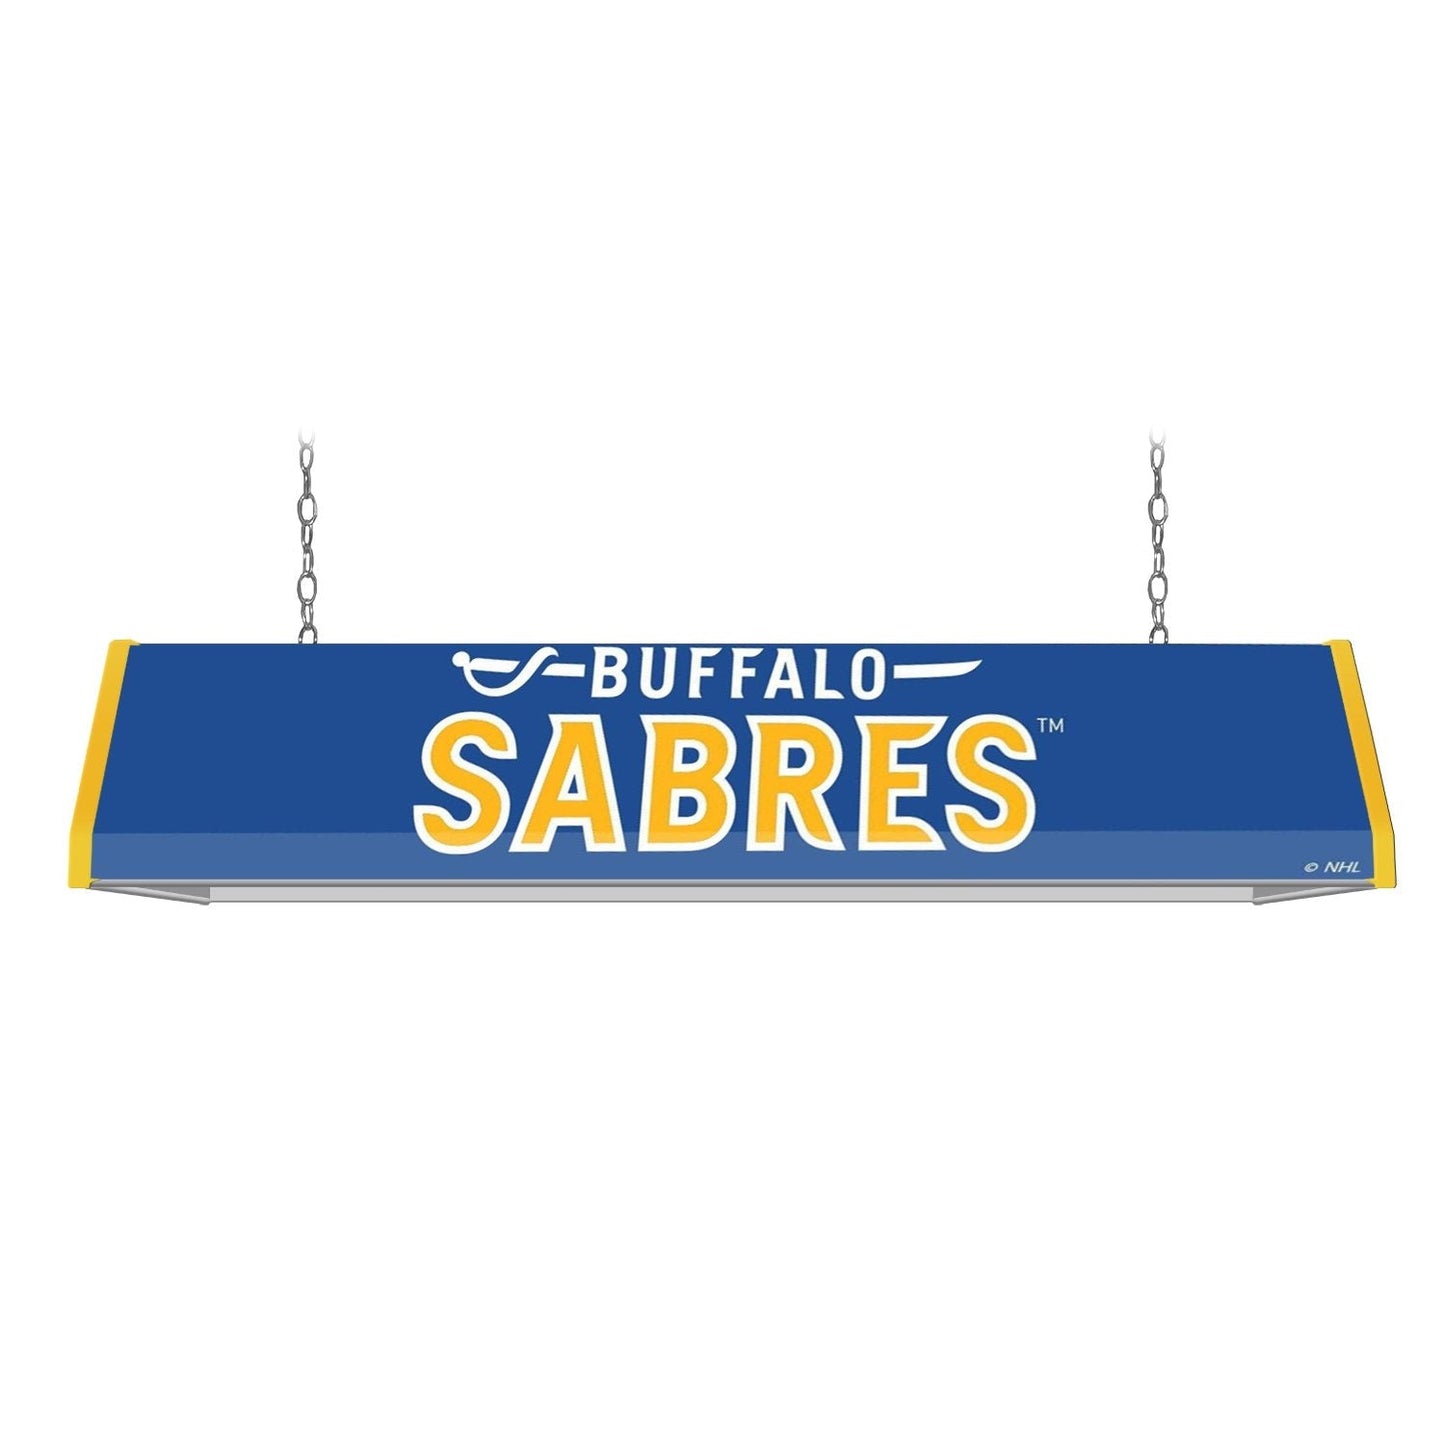 Buffalo Sabres: Standard Pool Table Light - The Fan-Brand